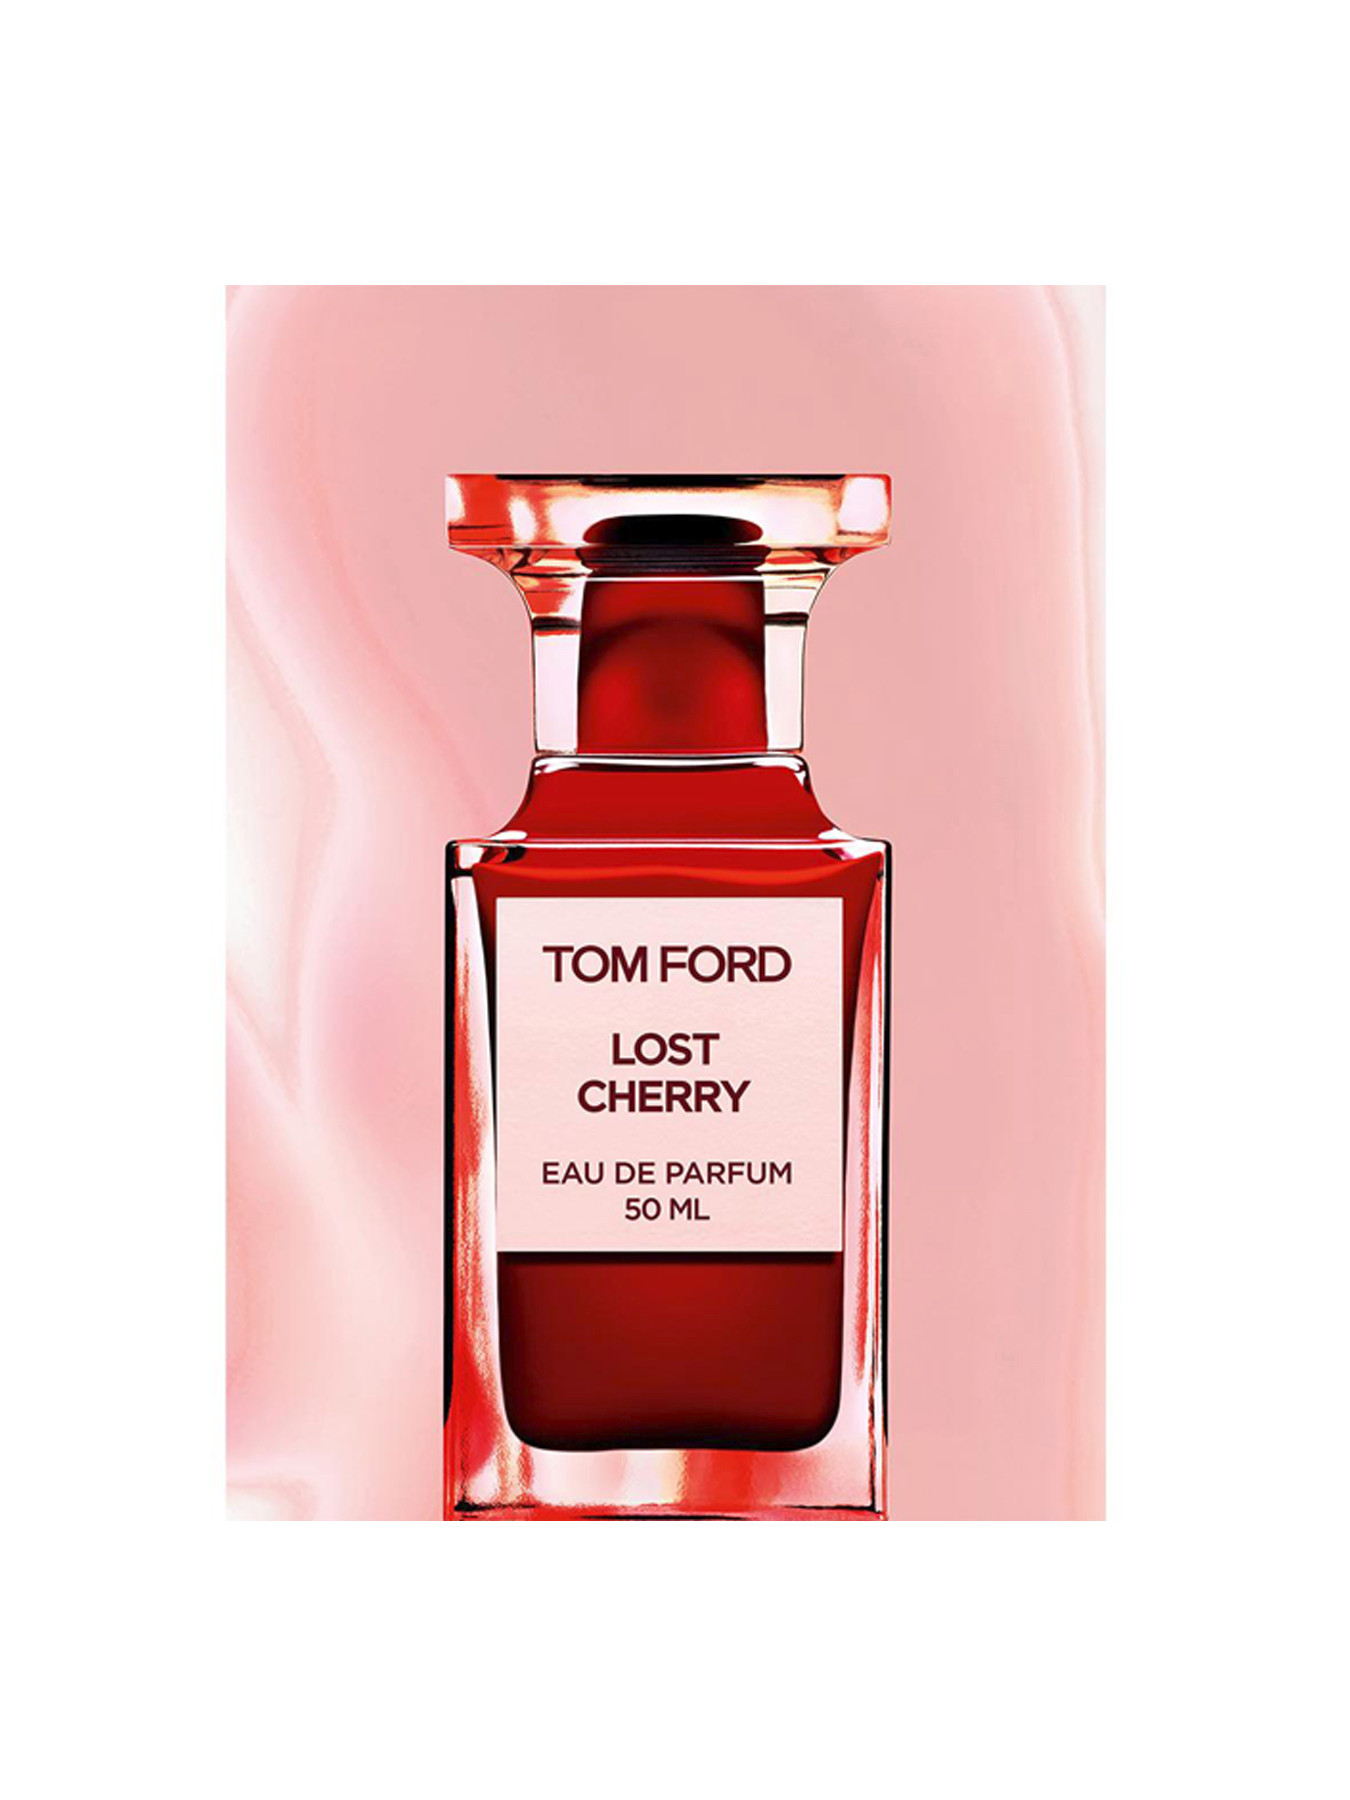 Tom Ford Lost Cherry Eau de Parfum 50 ml | Fenwick